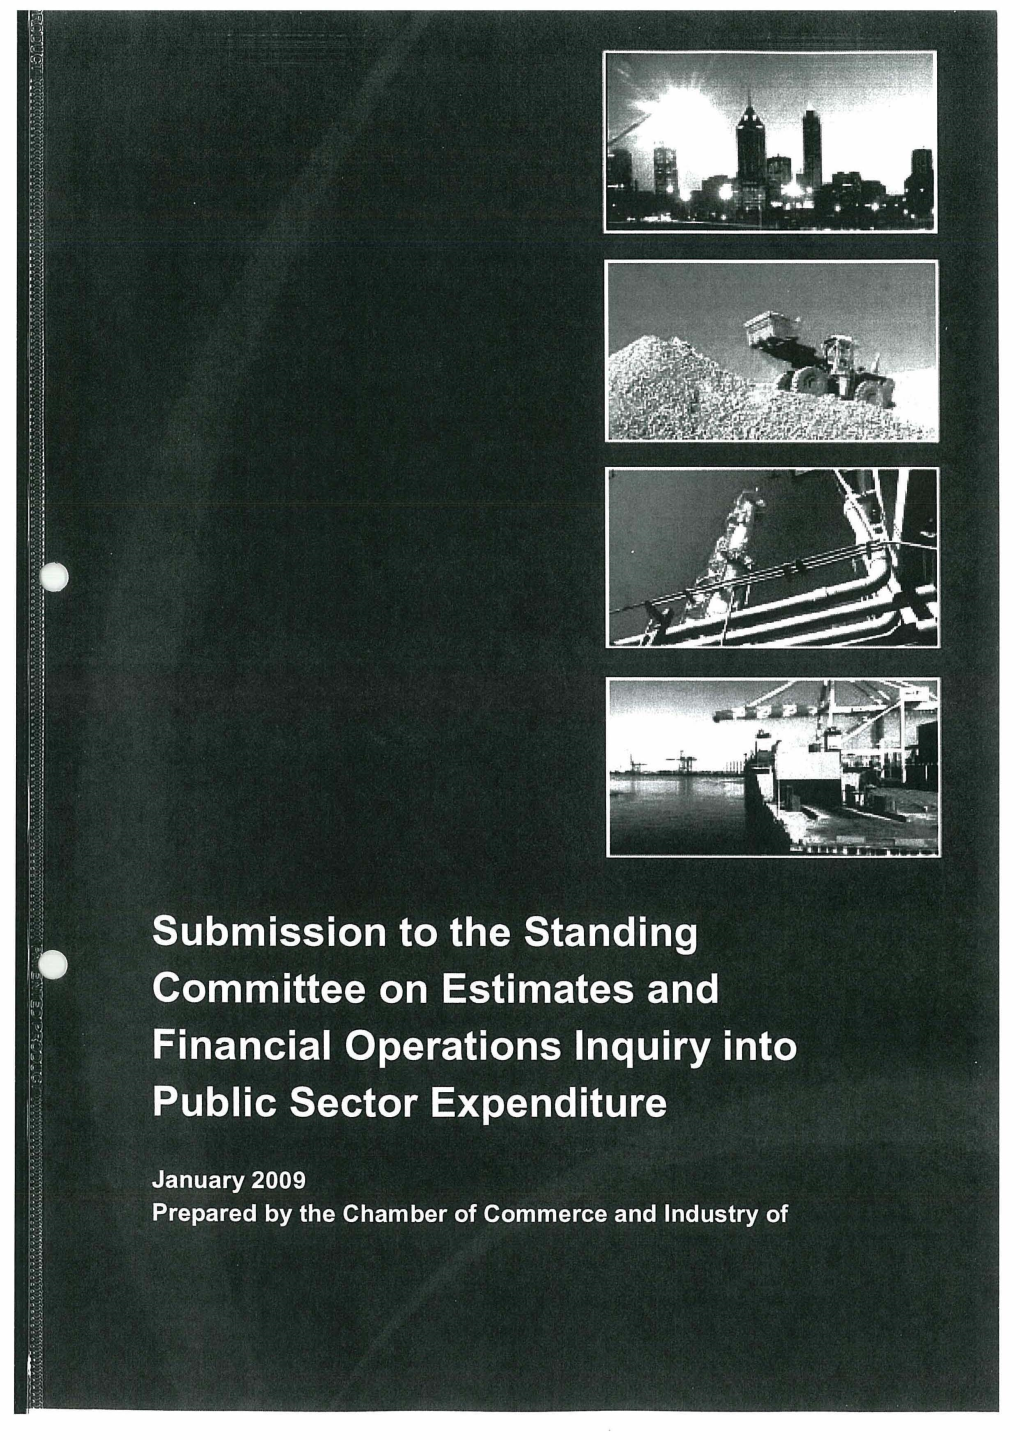 Public Sector Expenditure